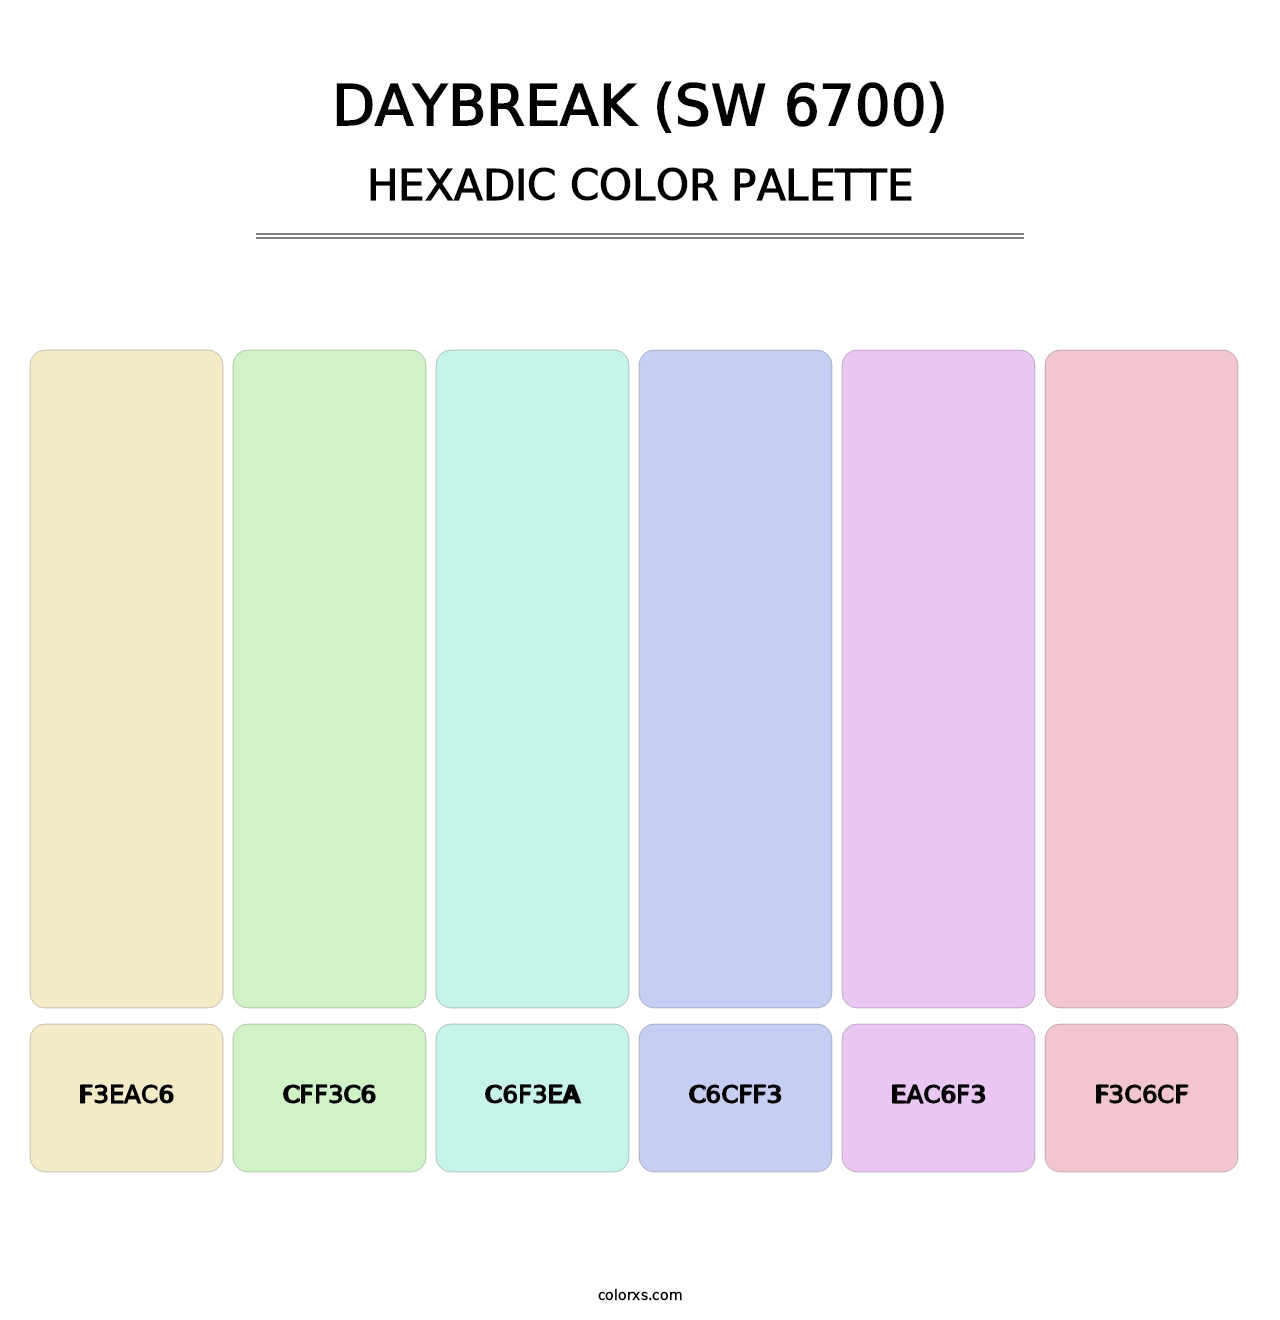 Daybreak (SW 6700) - Hexadic Color Palette